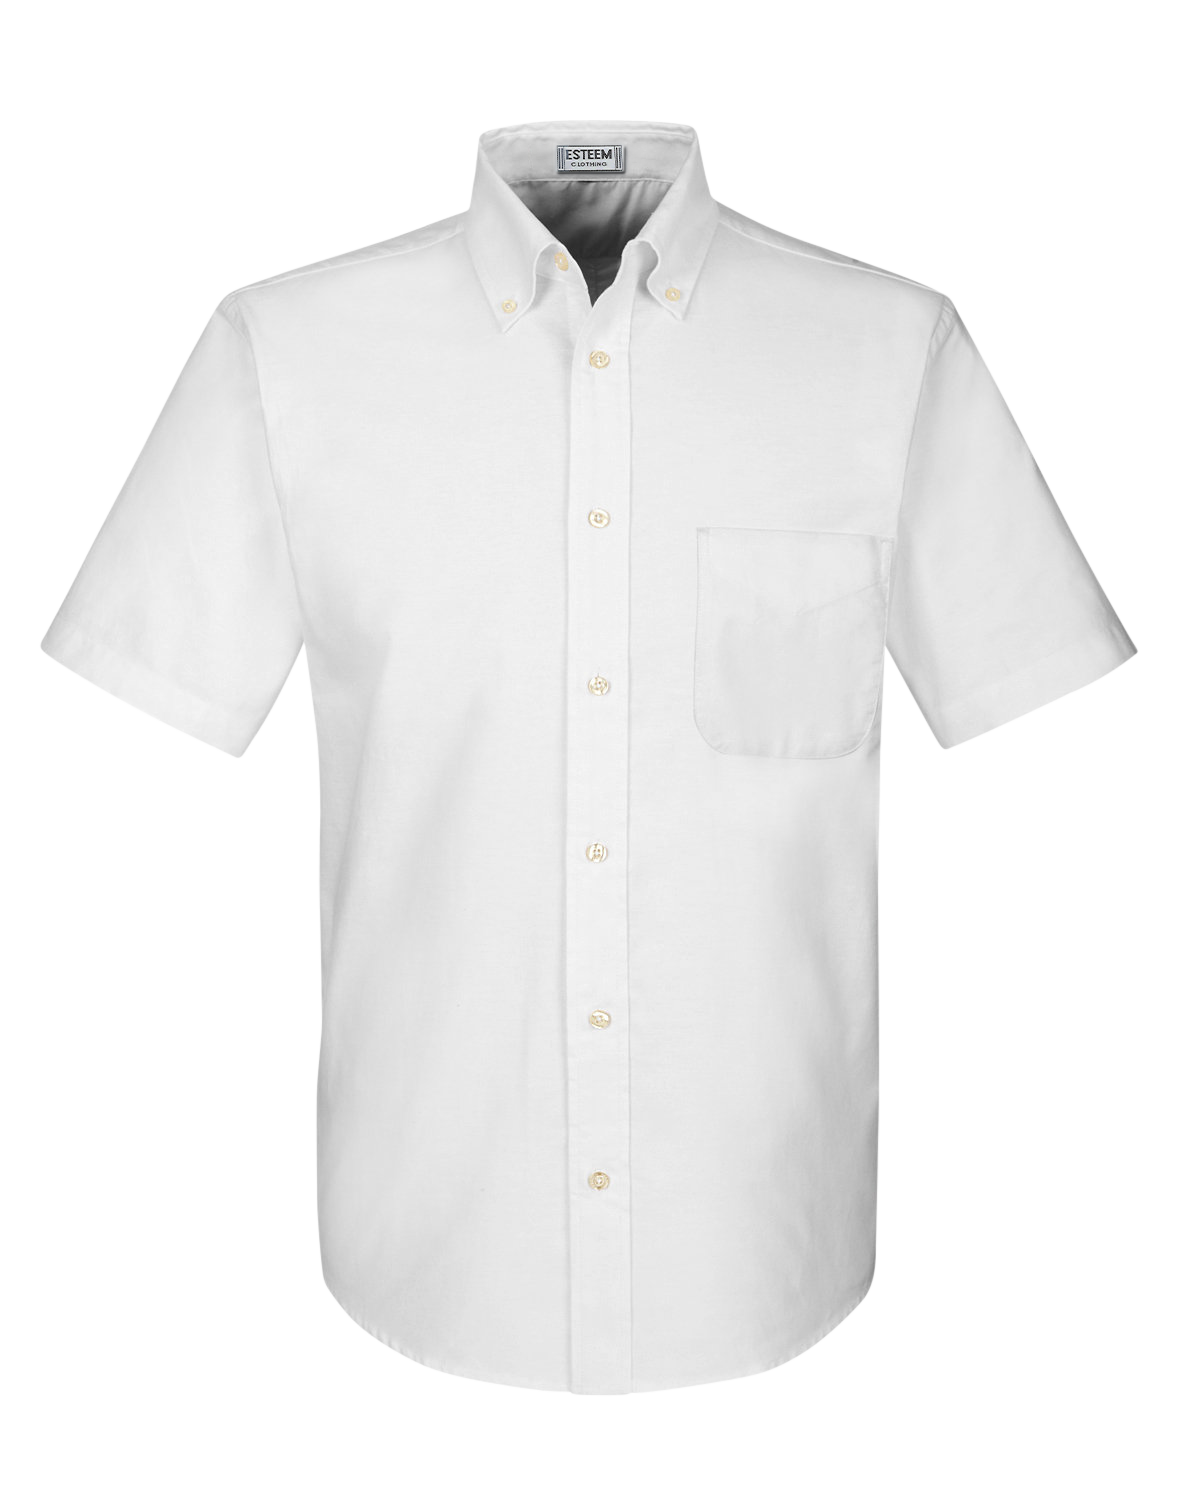 Men's Short Sleeve Oxford shirt - Code 33805